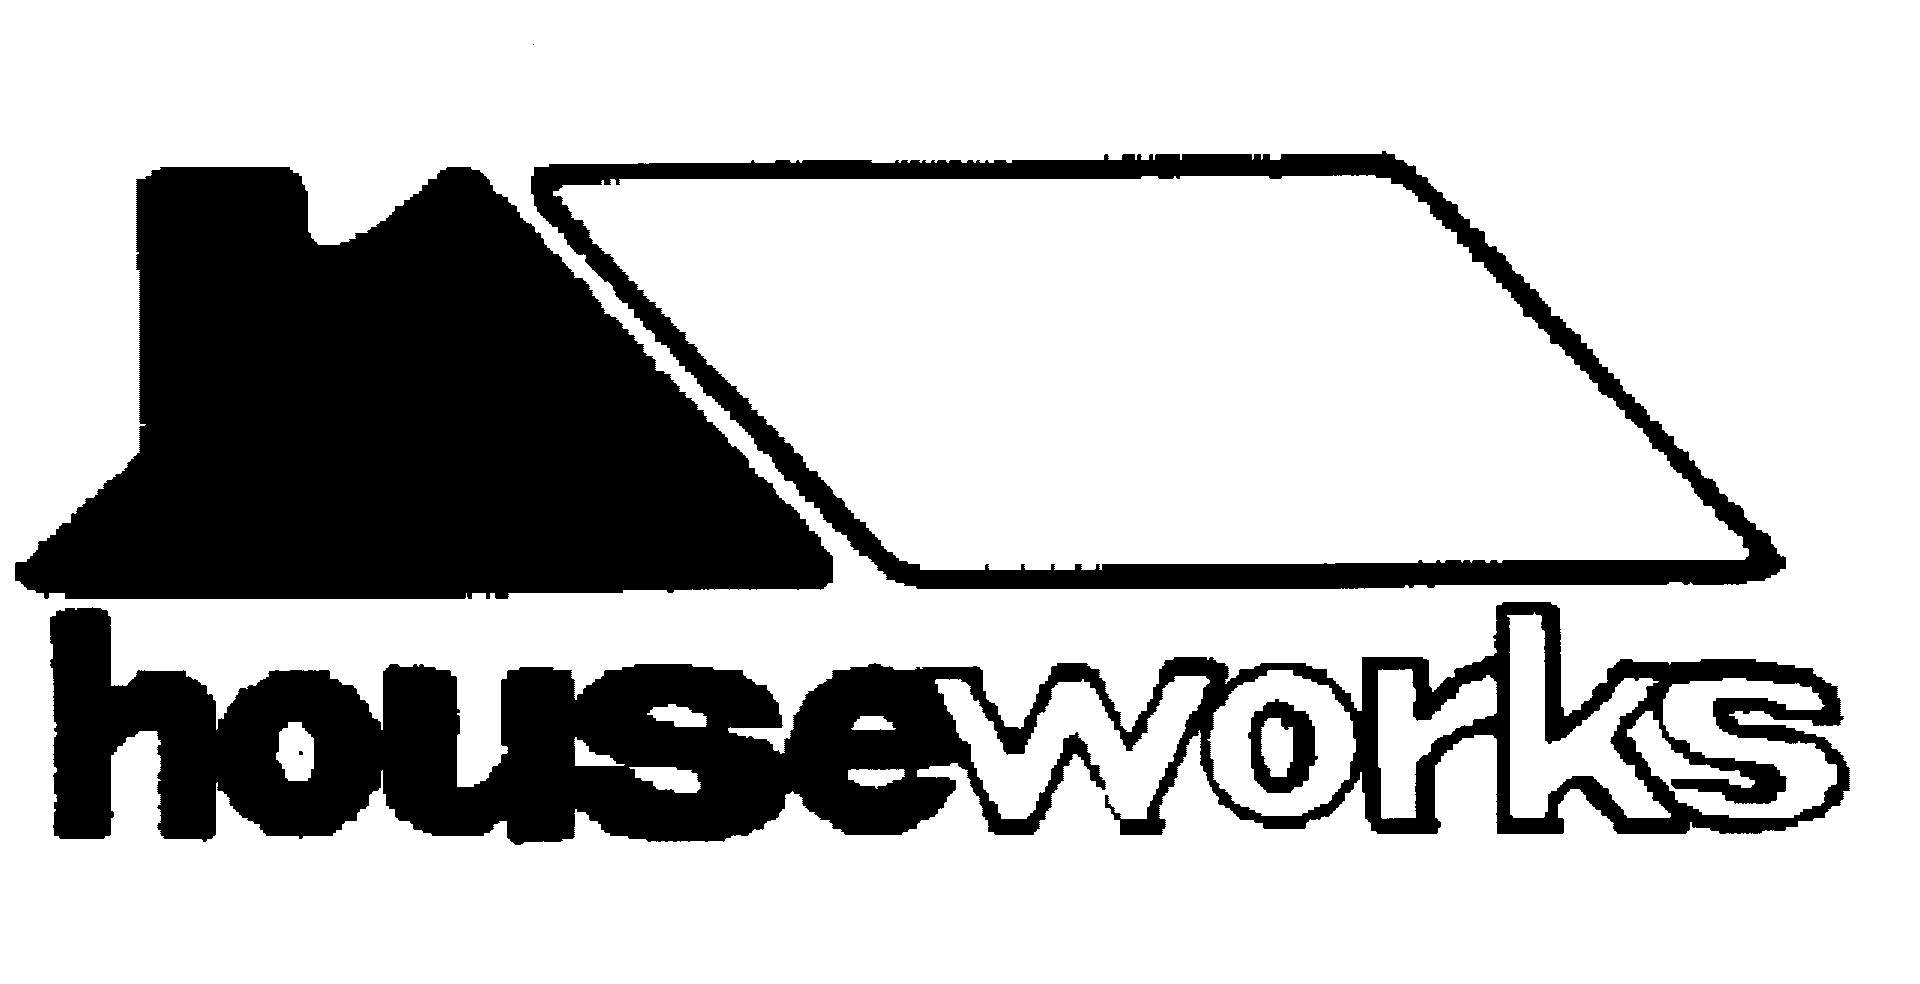 Trademark Logo HOUSEWORKS